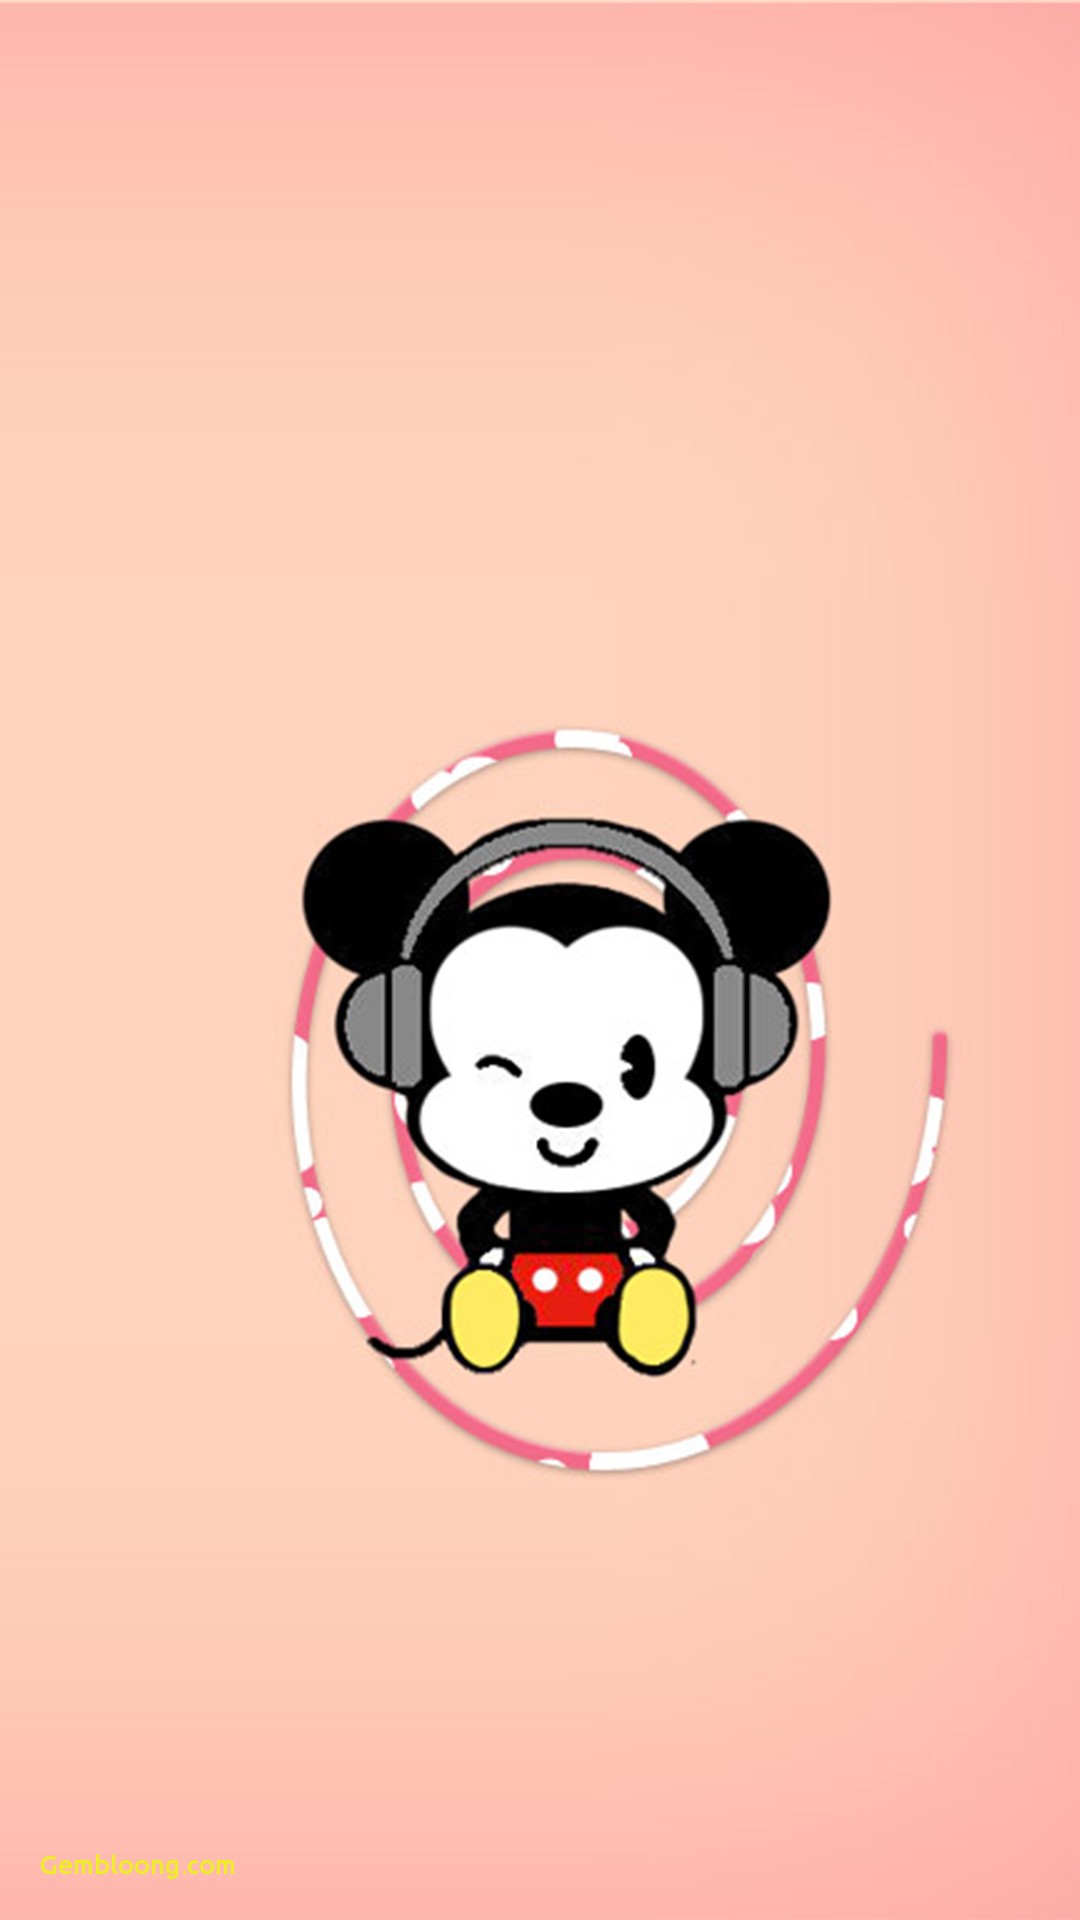 Mickey Mouse Wallpaper Cute - 1080x1920 Wallpaper 